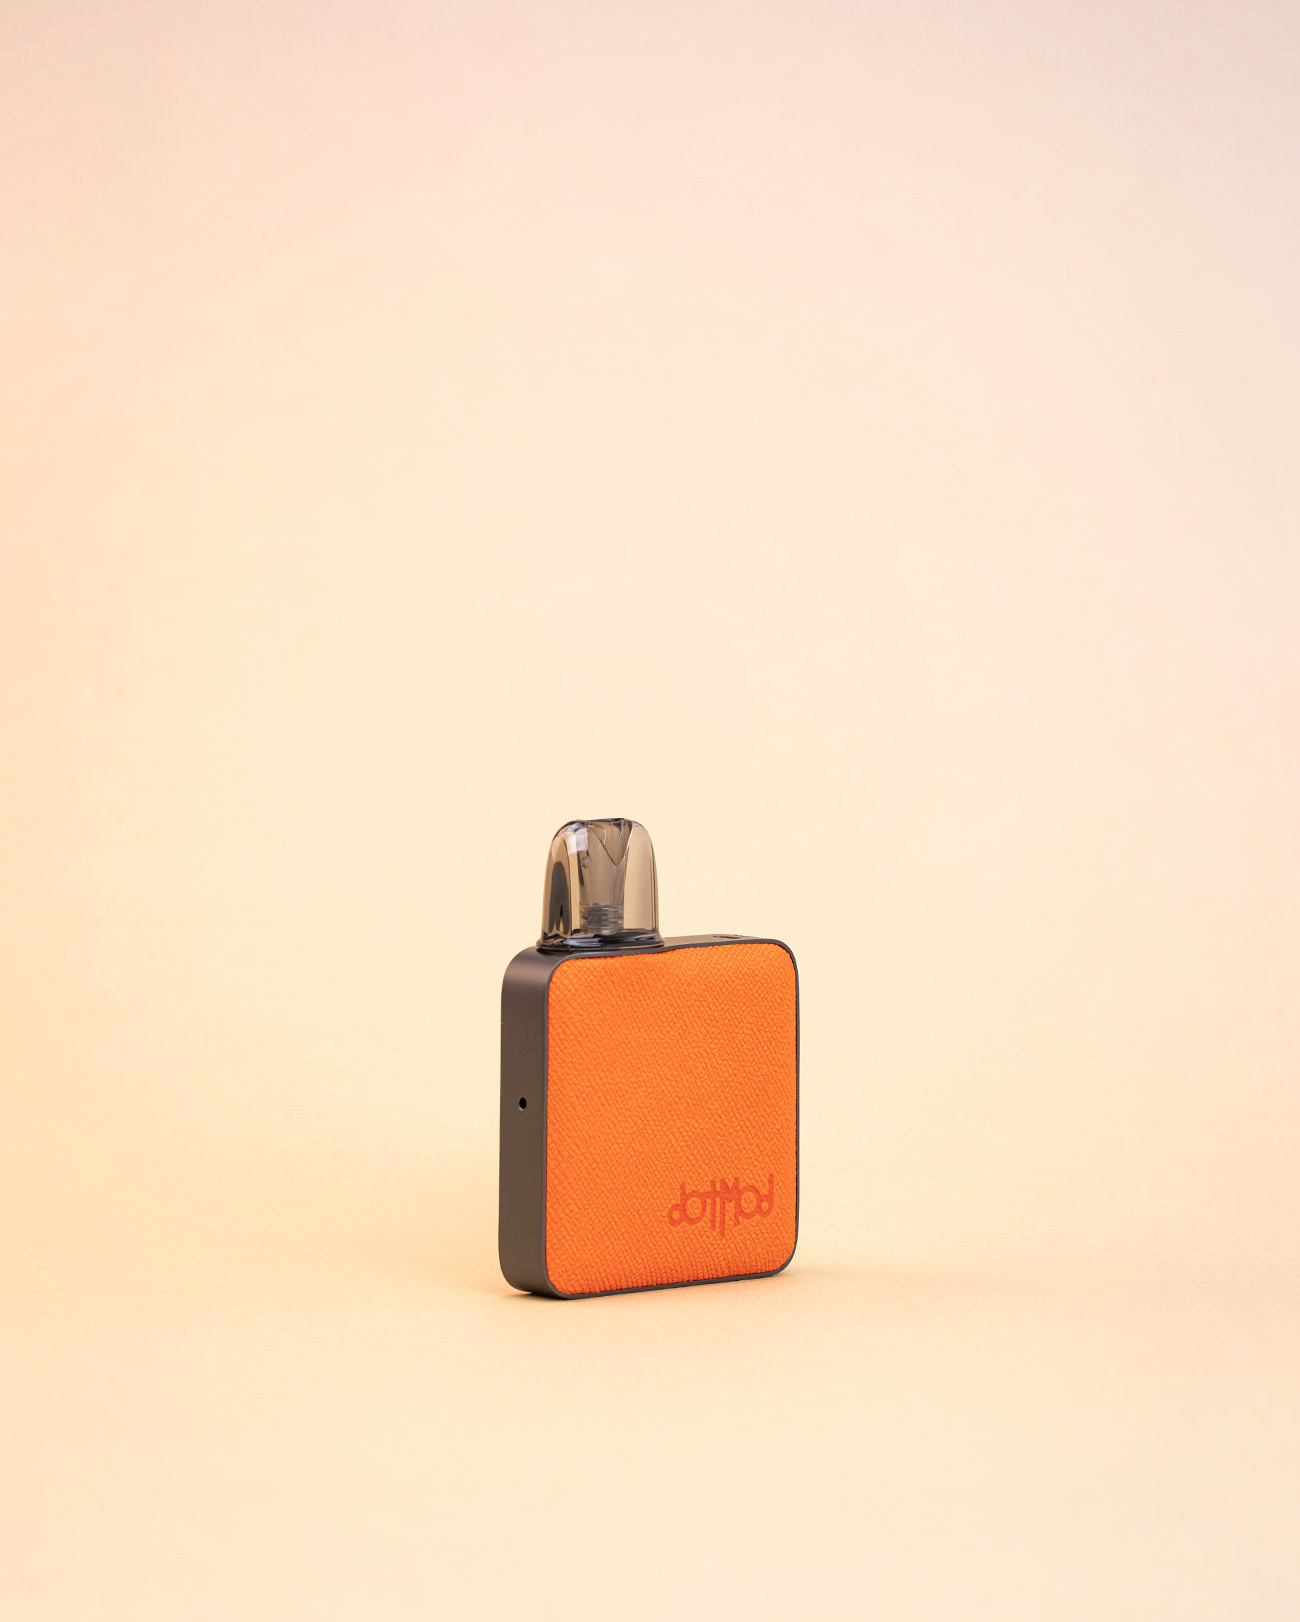 Kit cigarette électronique pod DotPod Nano DotMod couleur orange